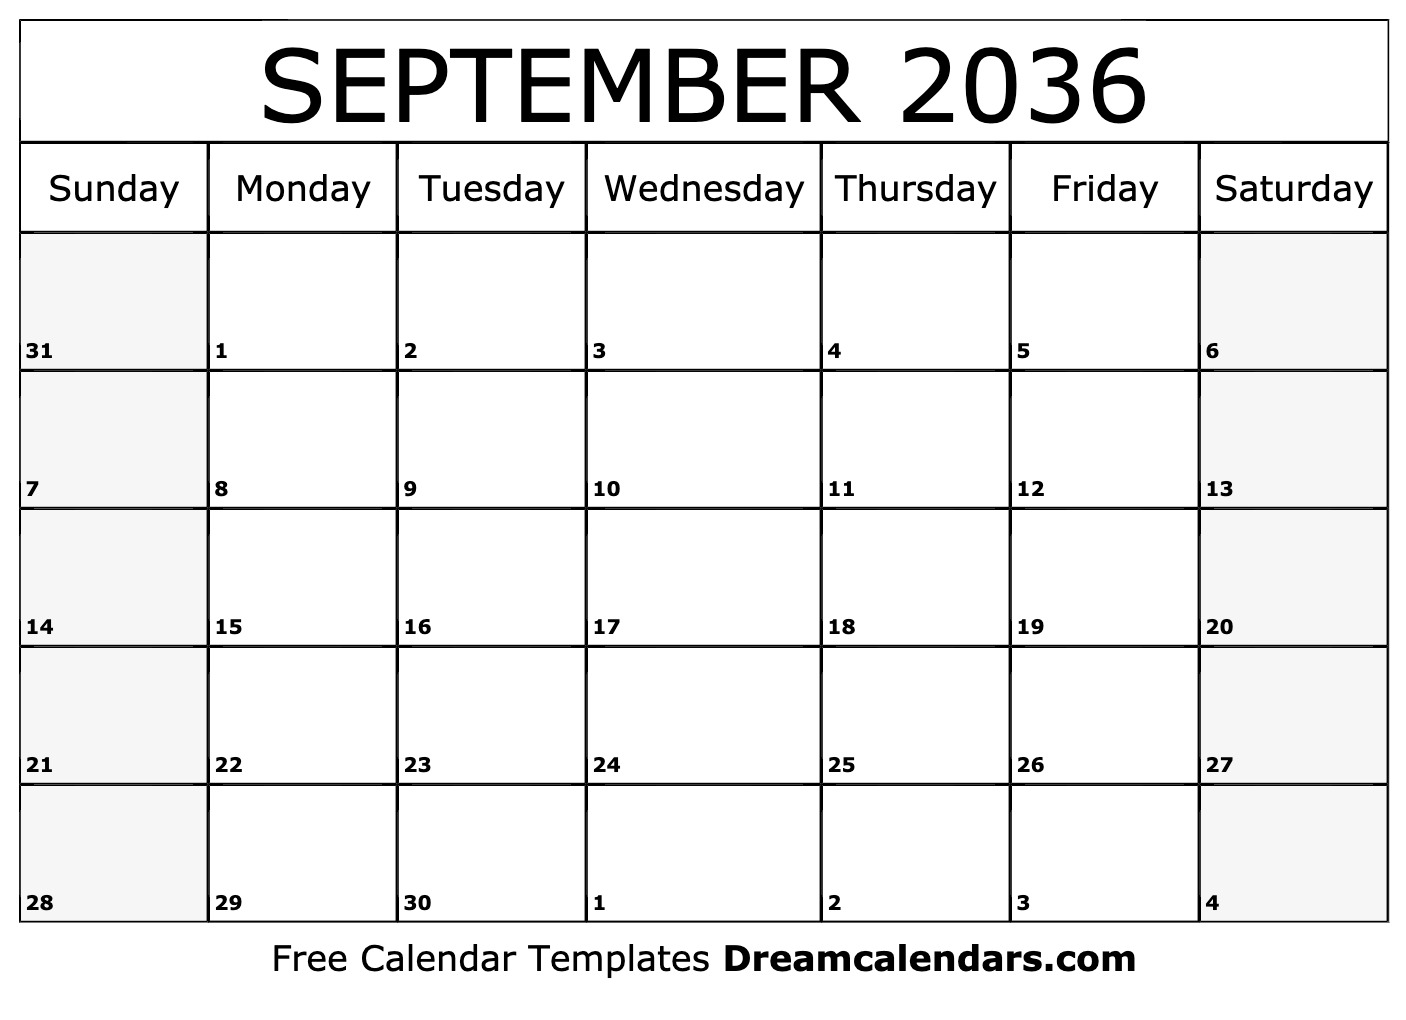 september-2036-calendar-free-blank-printable-with-holidays